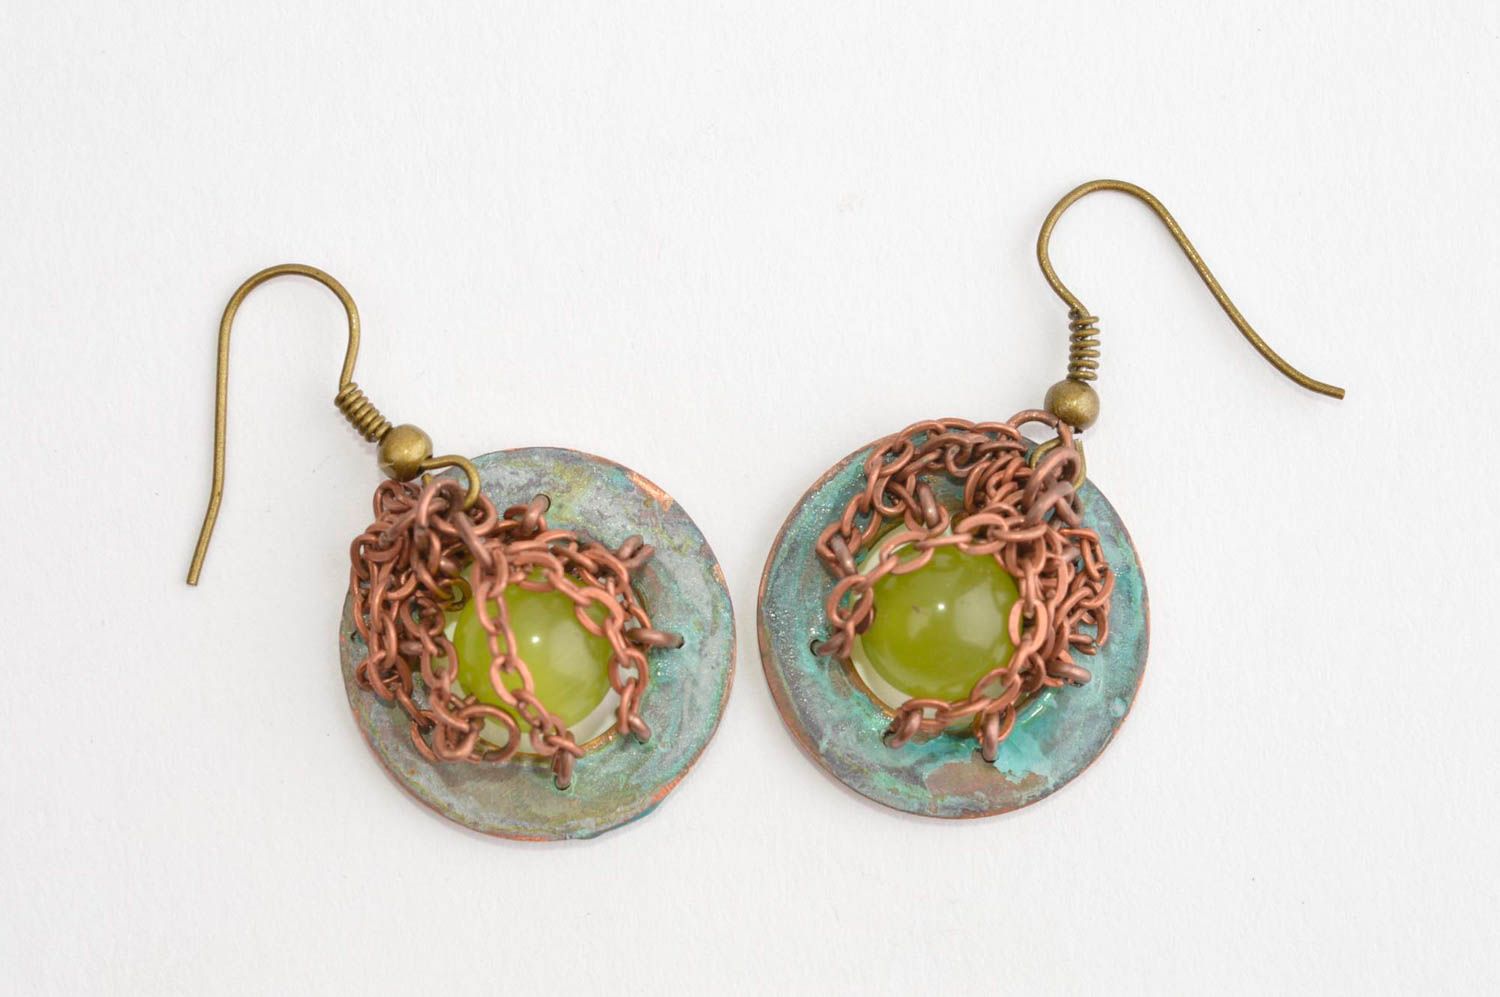 Handmade earrings unusual accessories designer jewelry copper earrings photo 2